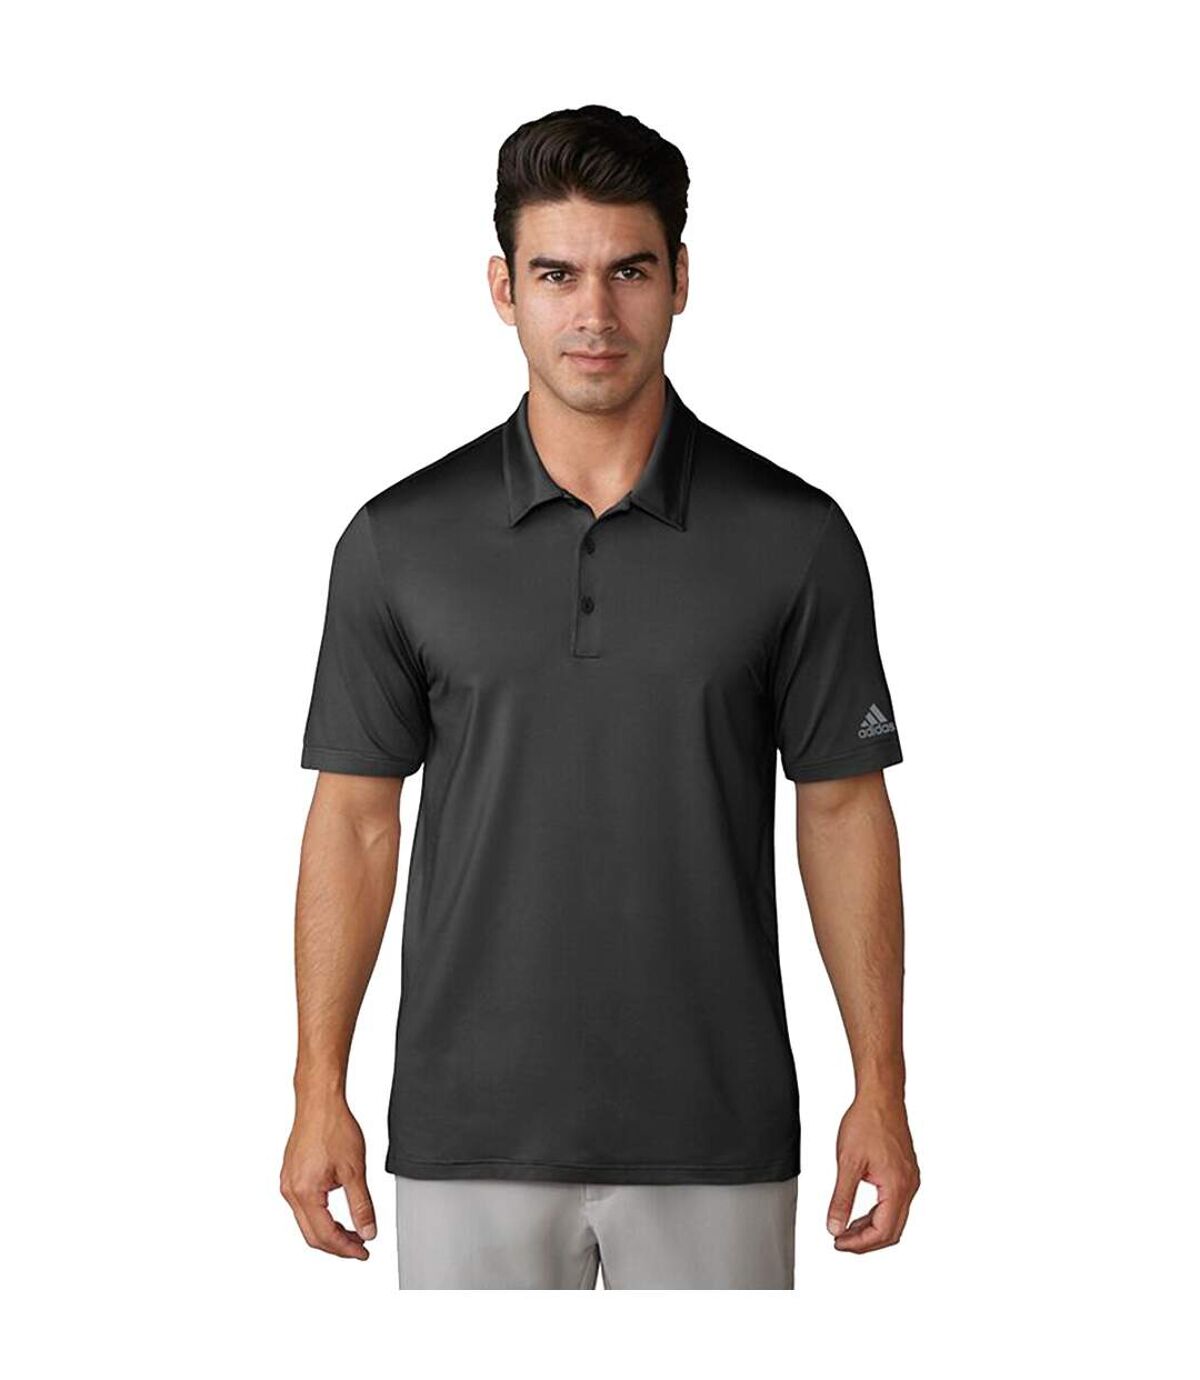 Adidas Mens Ultimate 365 Polo Shirt (Black)